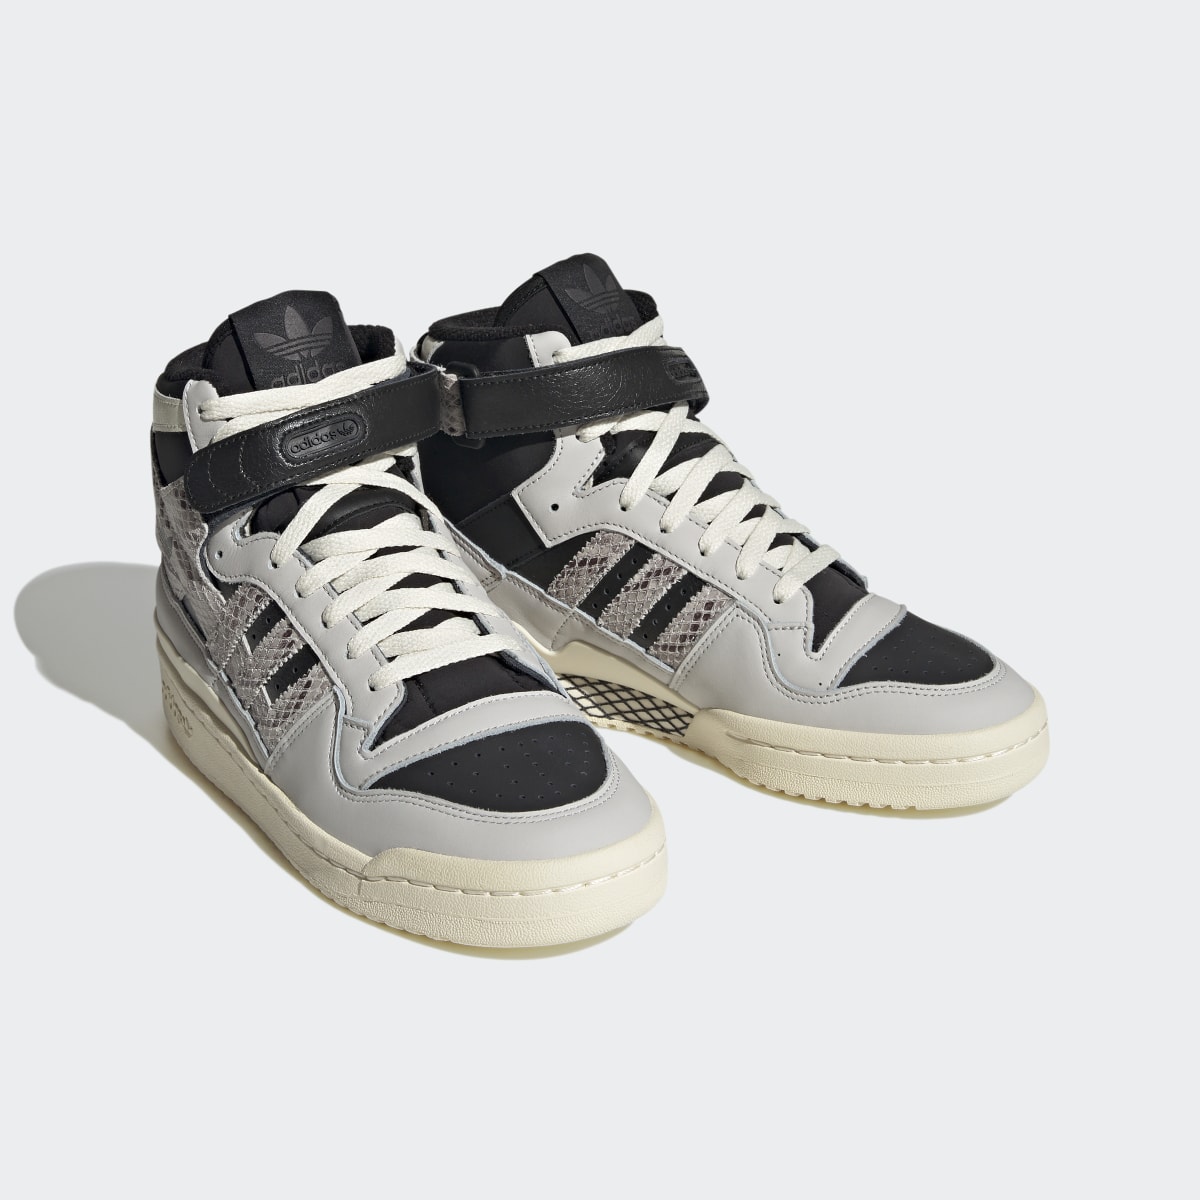 Adidas Forum 84 Hi Shoes. 5